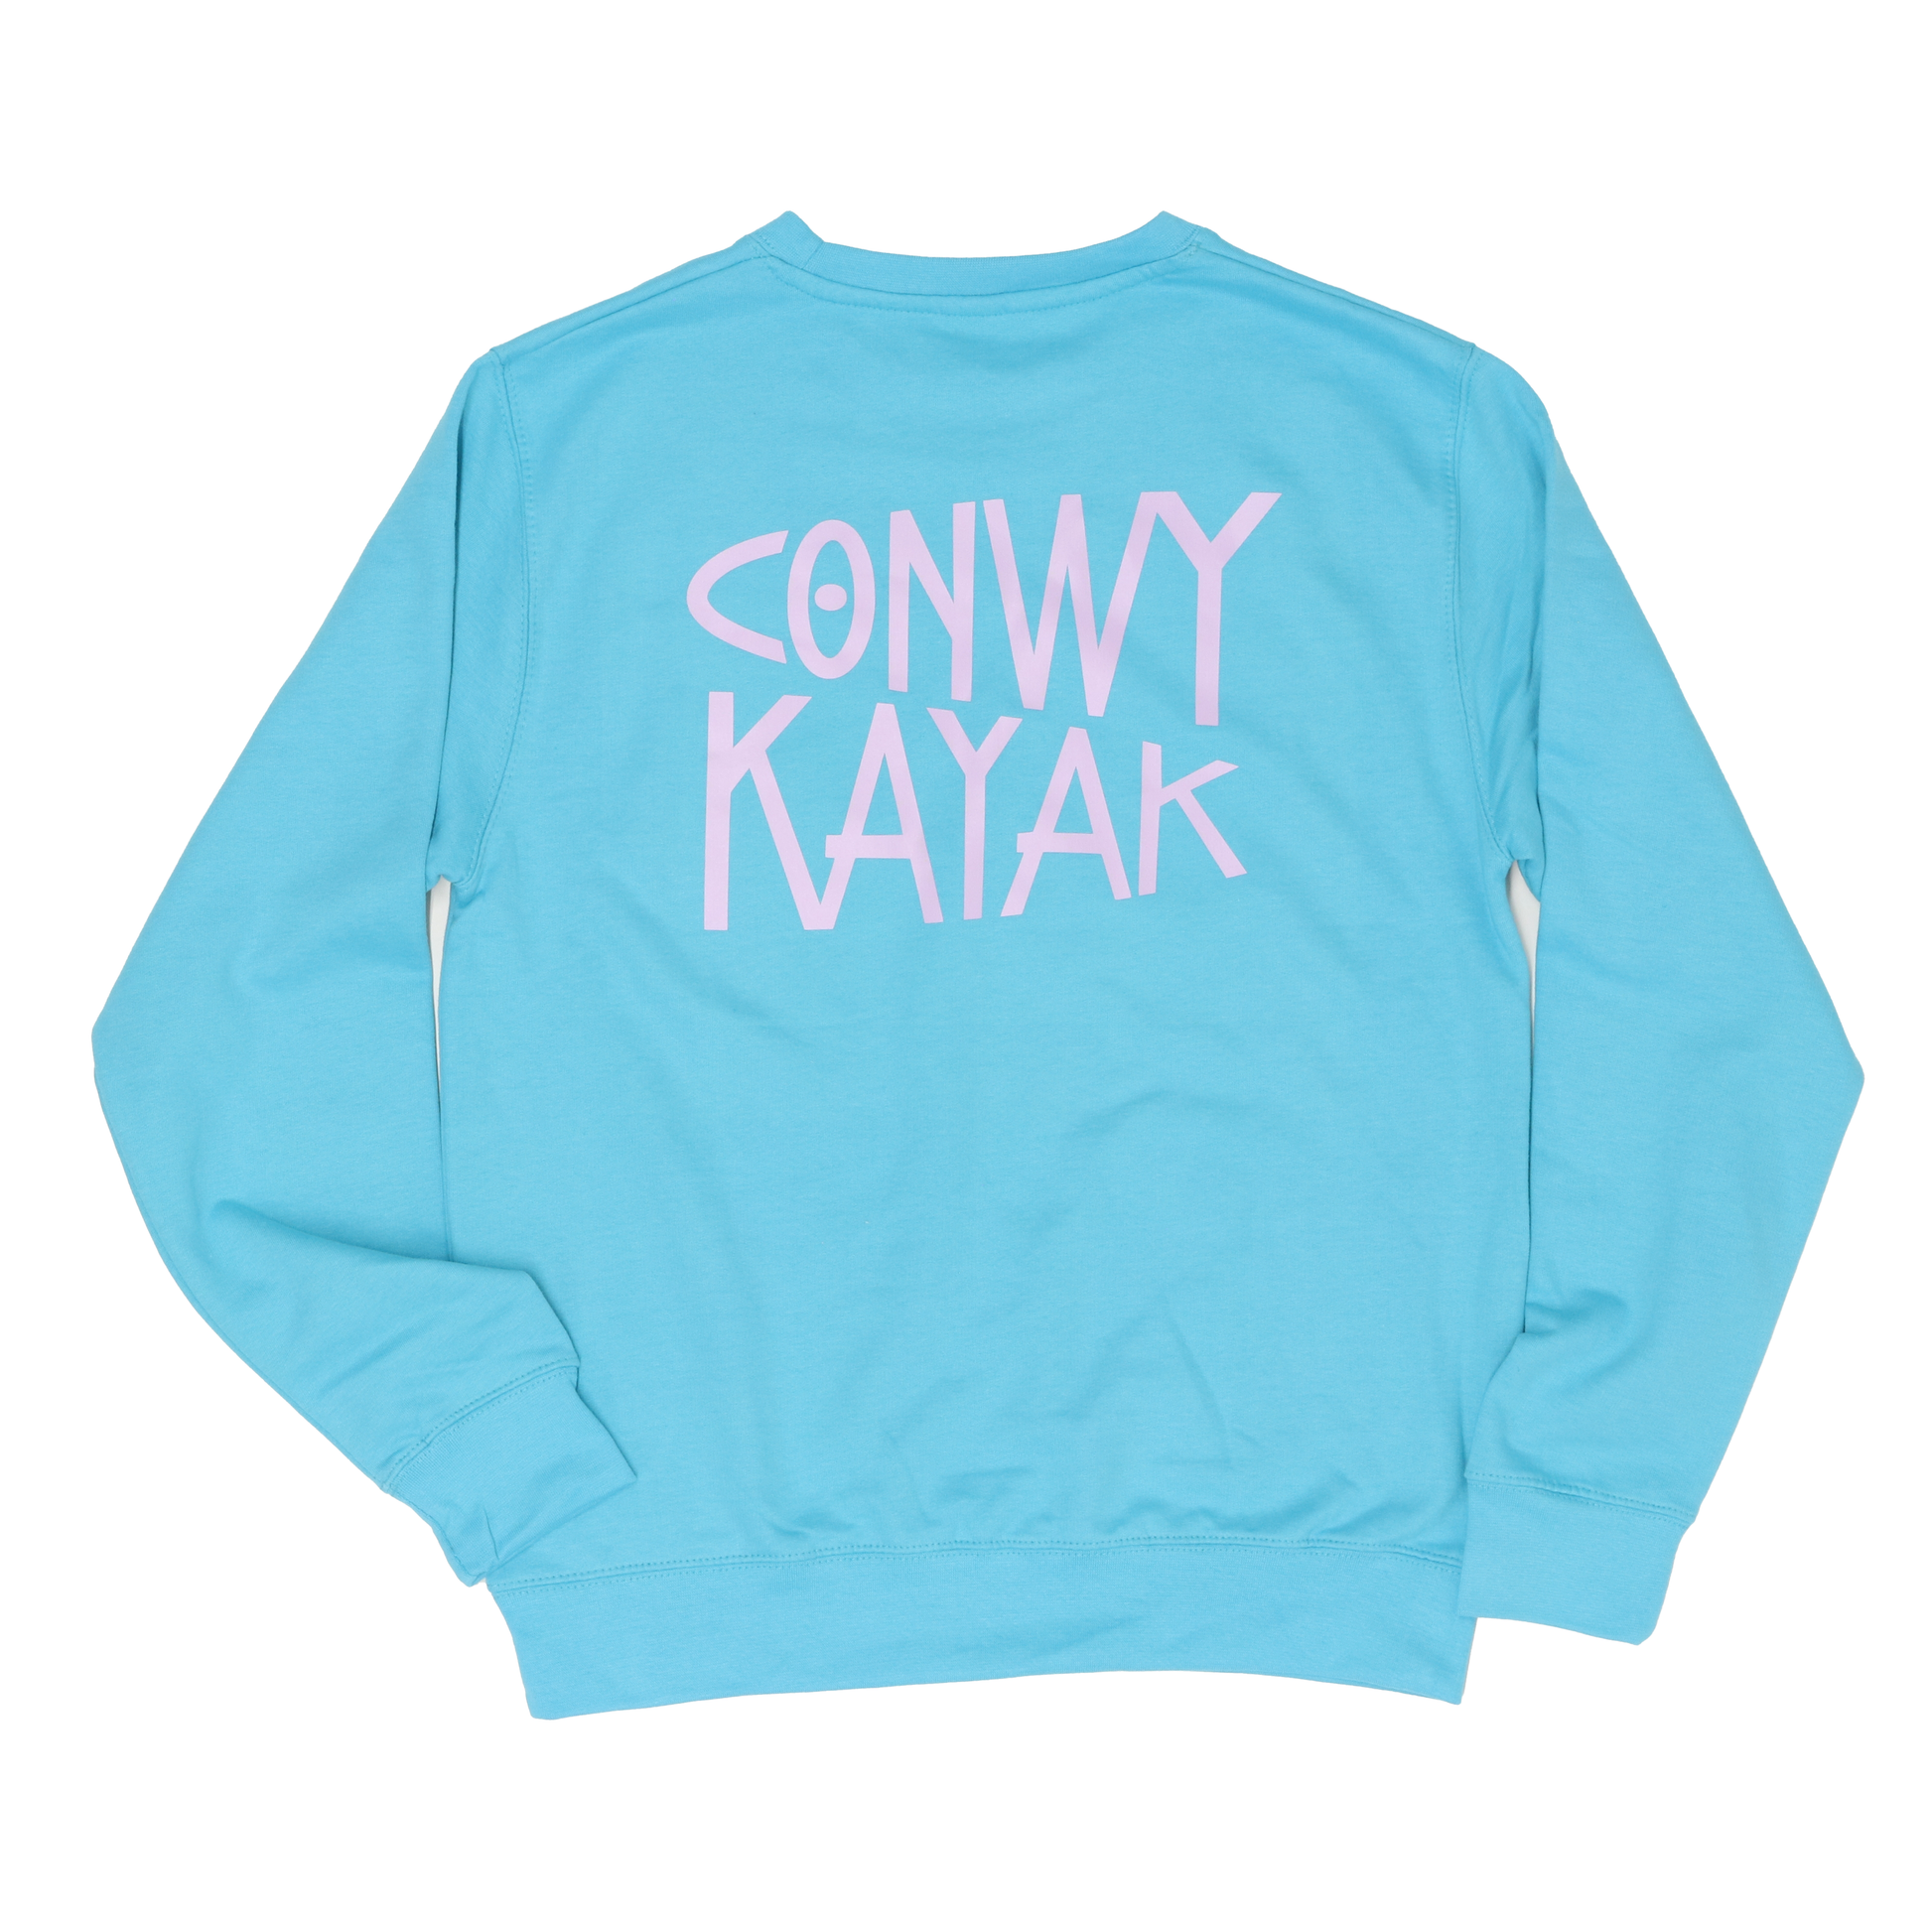 Conwy Kayak - Light Blue Crewneck Sweater - 1